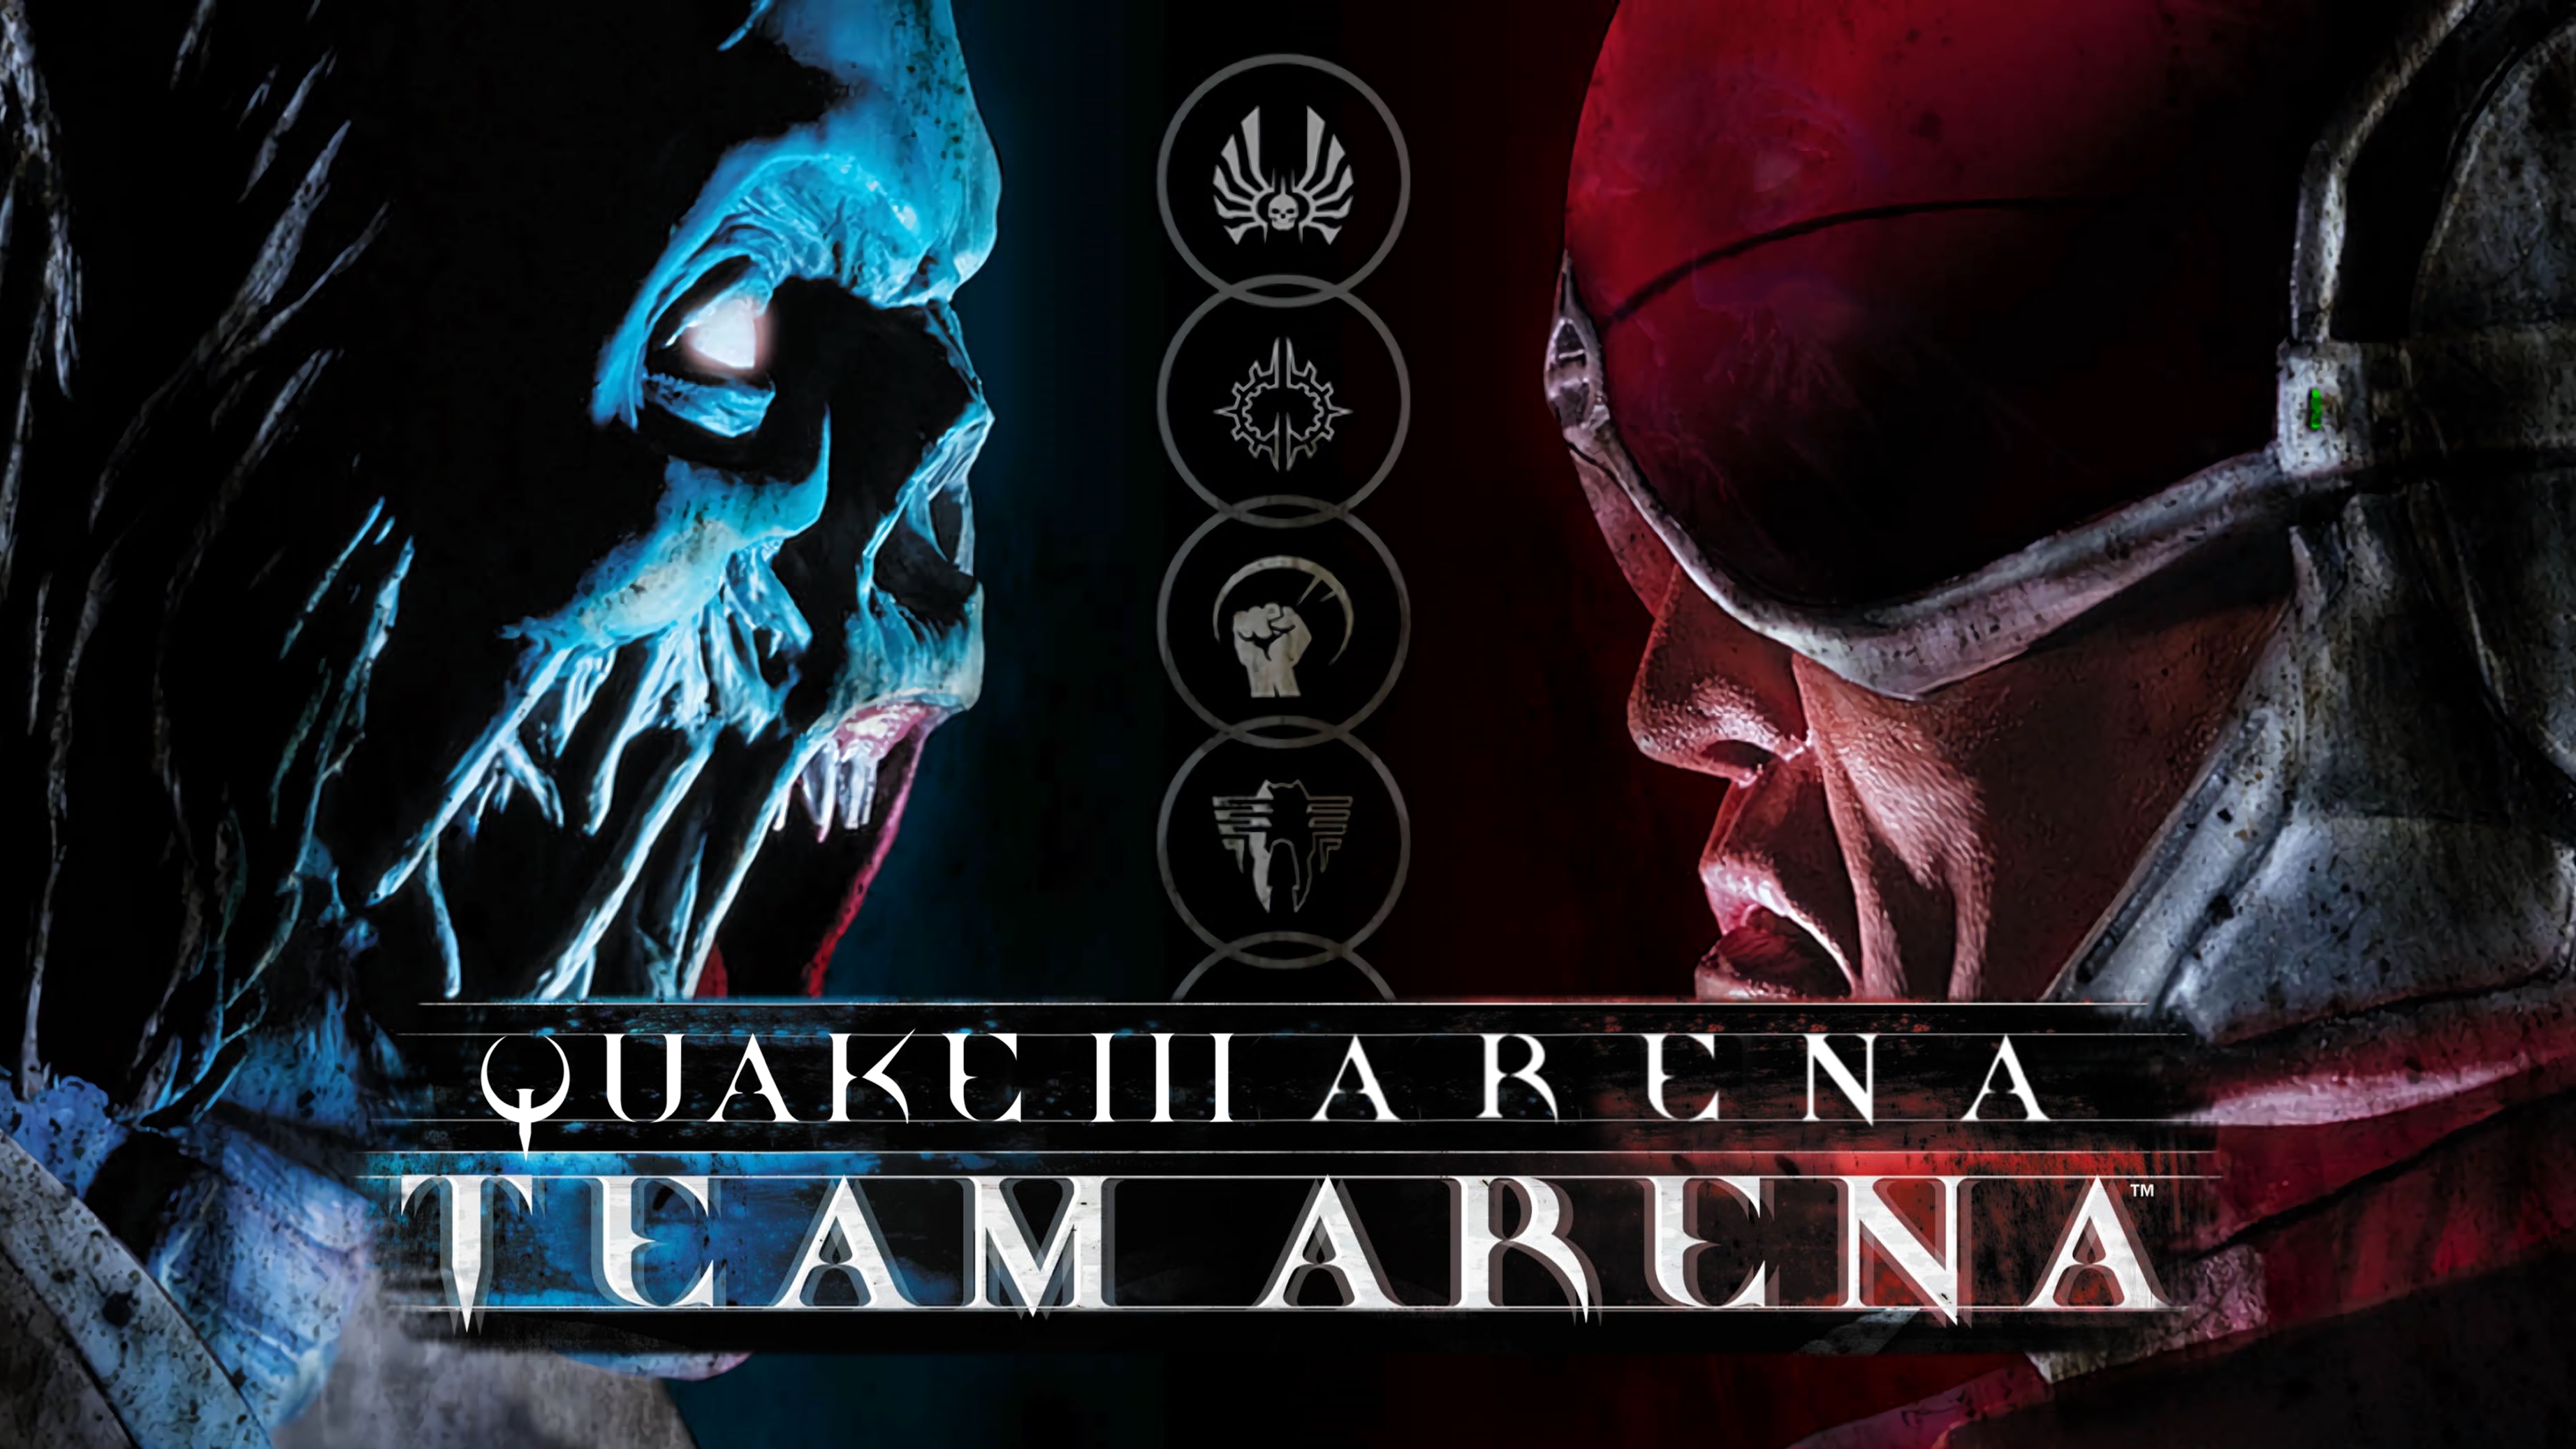 Quake team arena. Quake III Team Arena. Quake 3 Arena обложка. Quake III Arena Minx синяя. Quake 3 Arena Art.